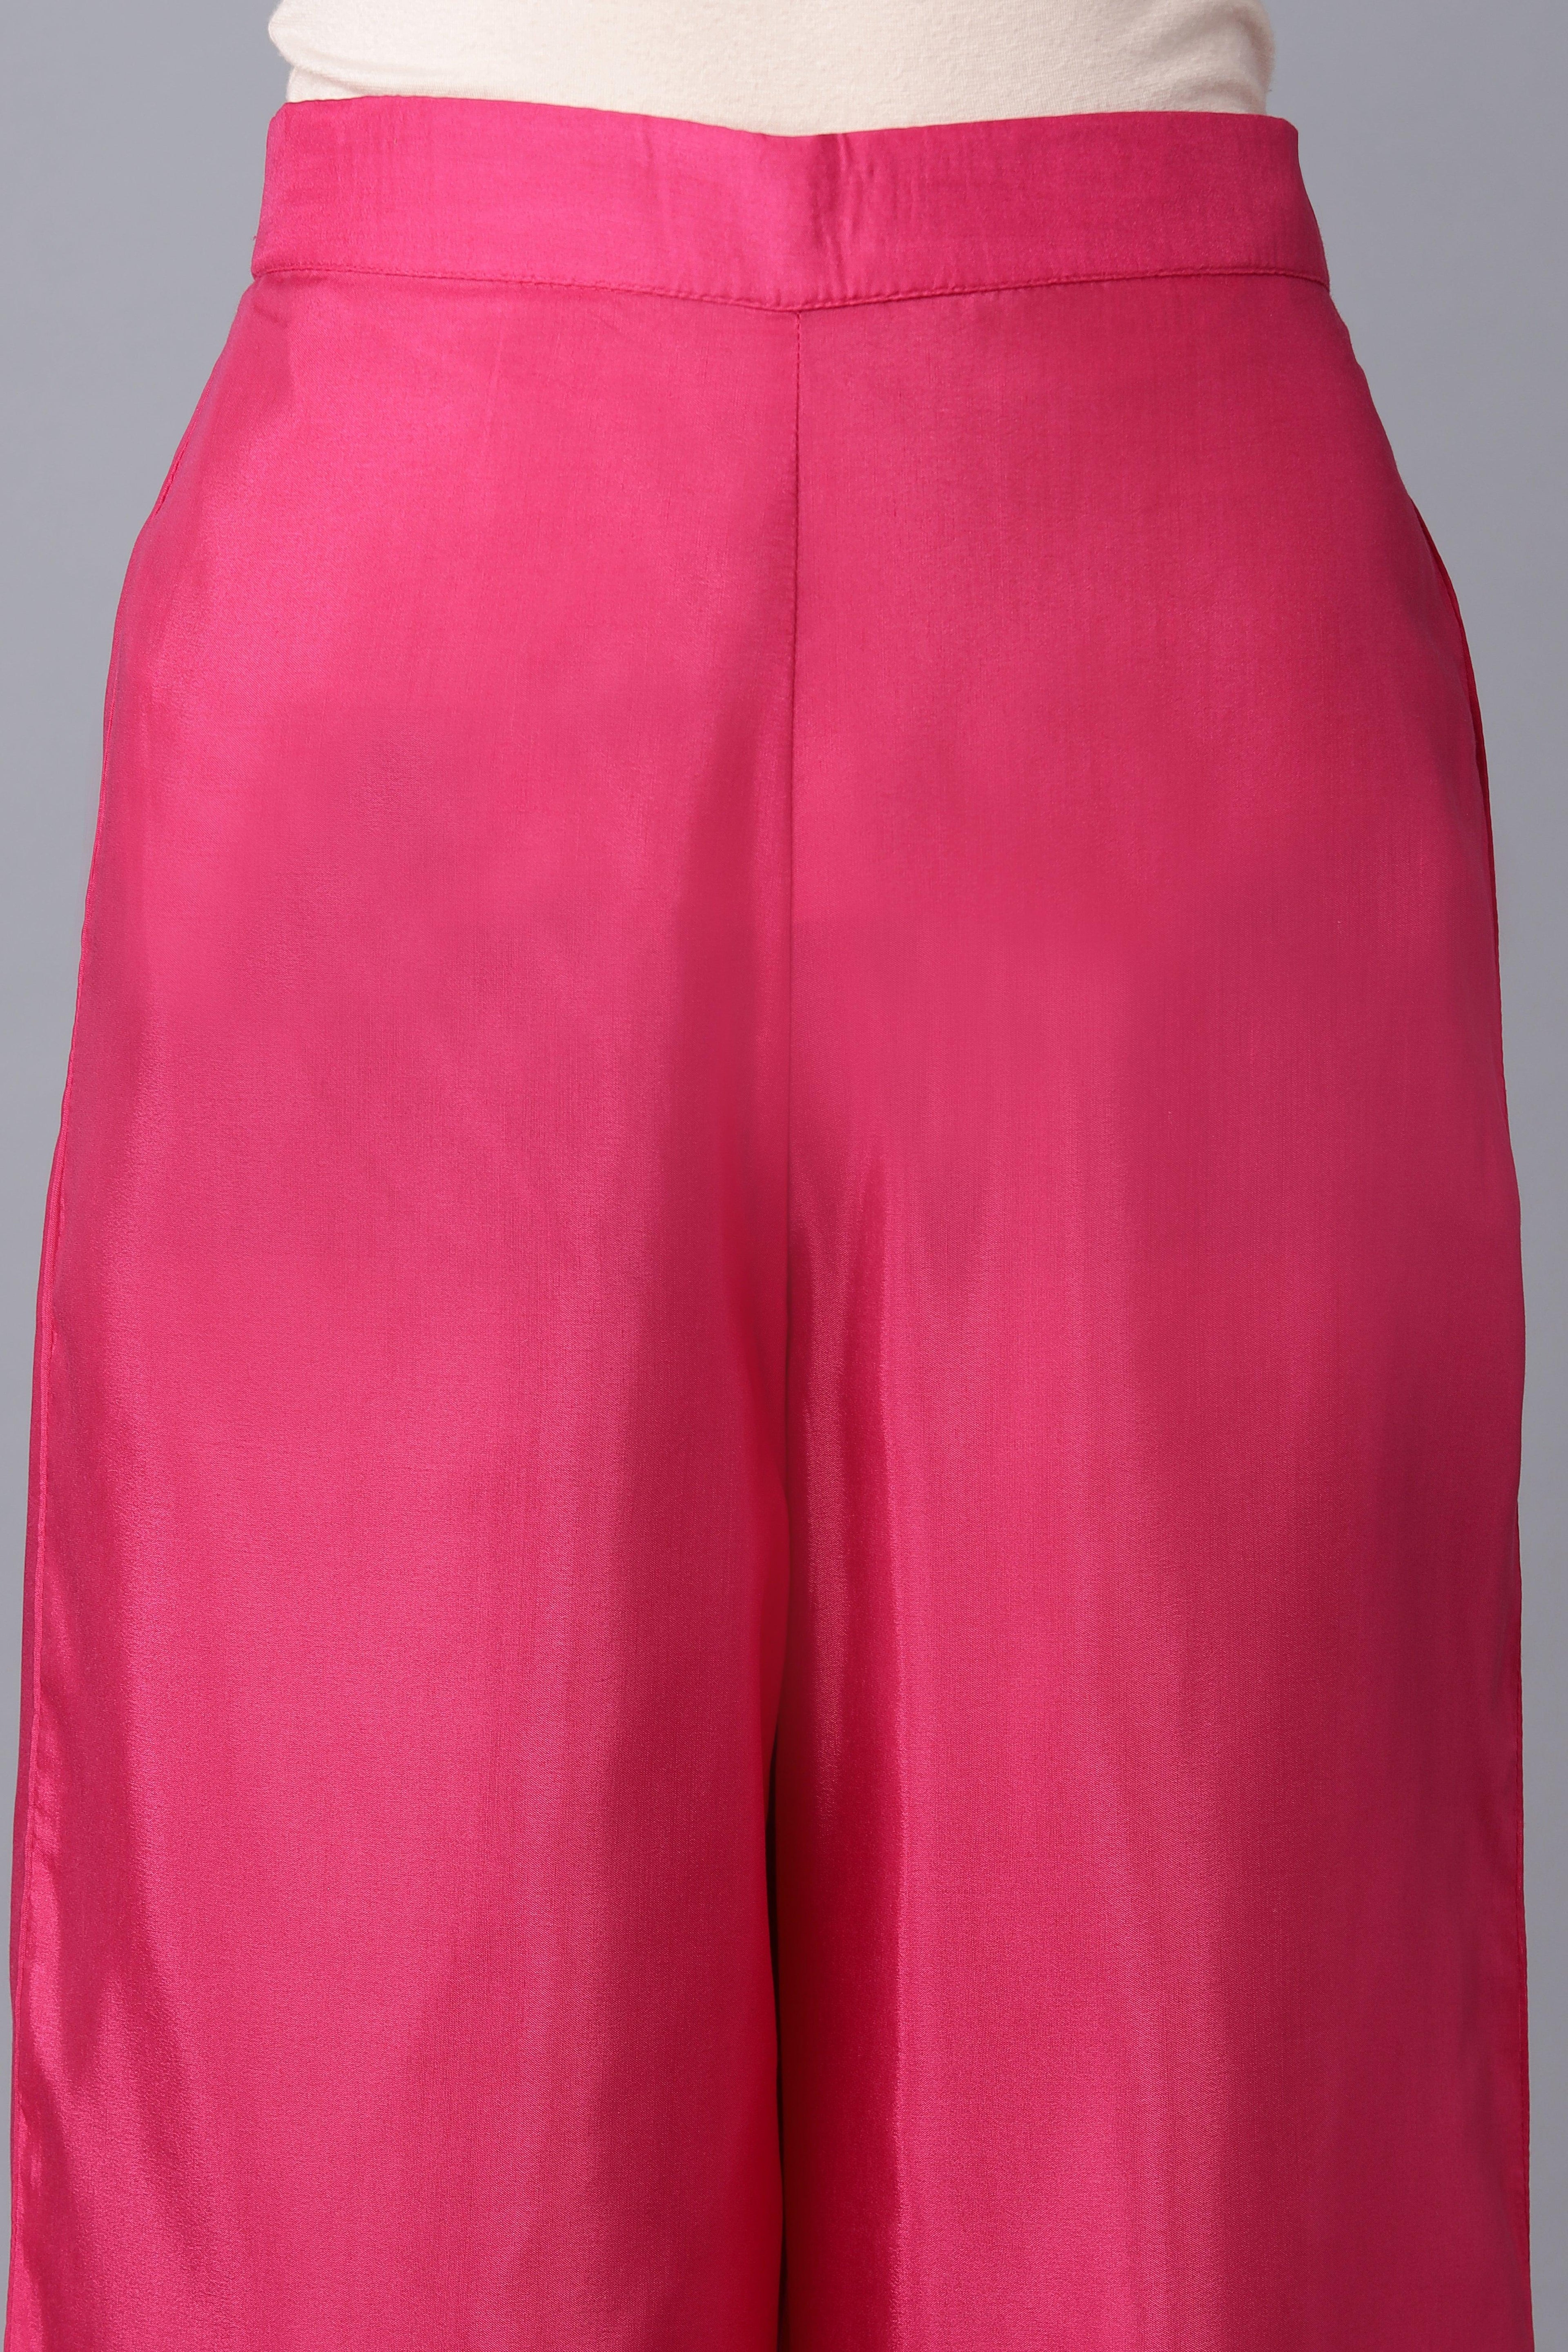 Dark Blue Embroidered kurta-Pink Parallel Pants-Dupatta - wforwoman